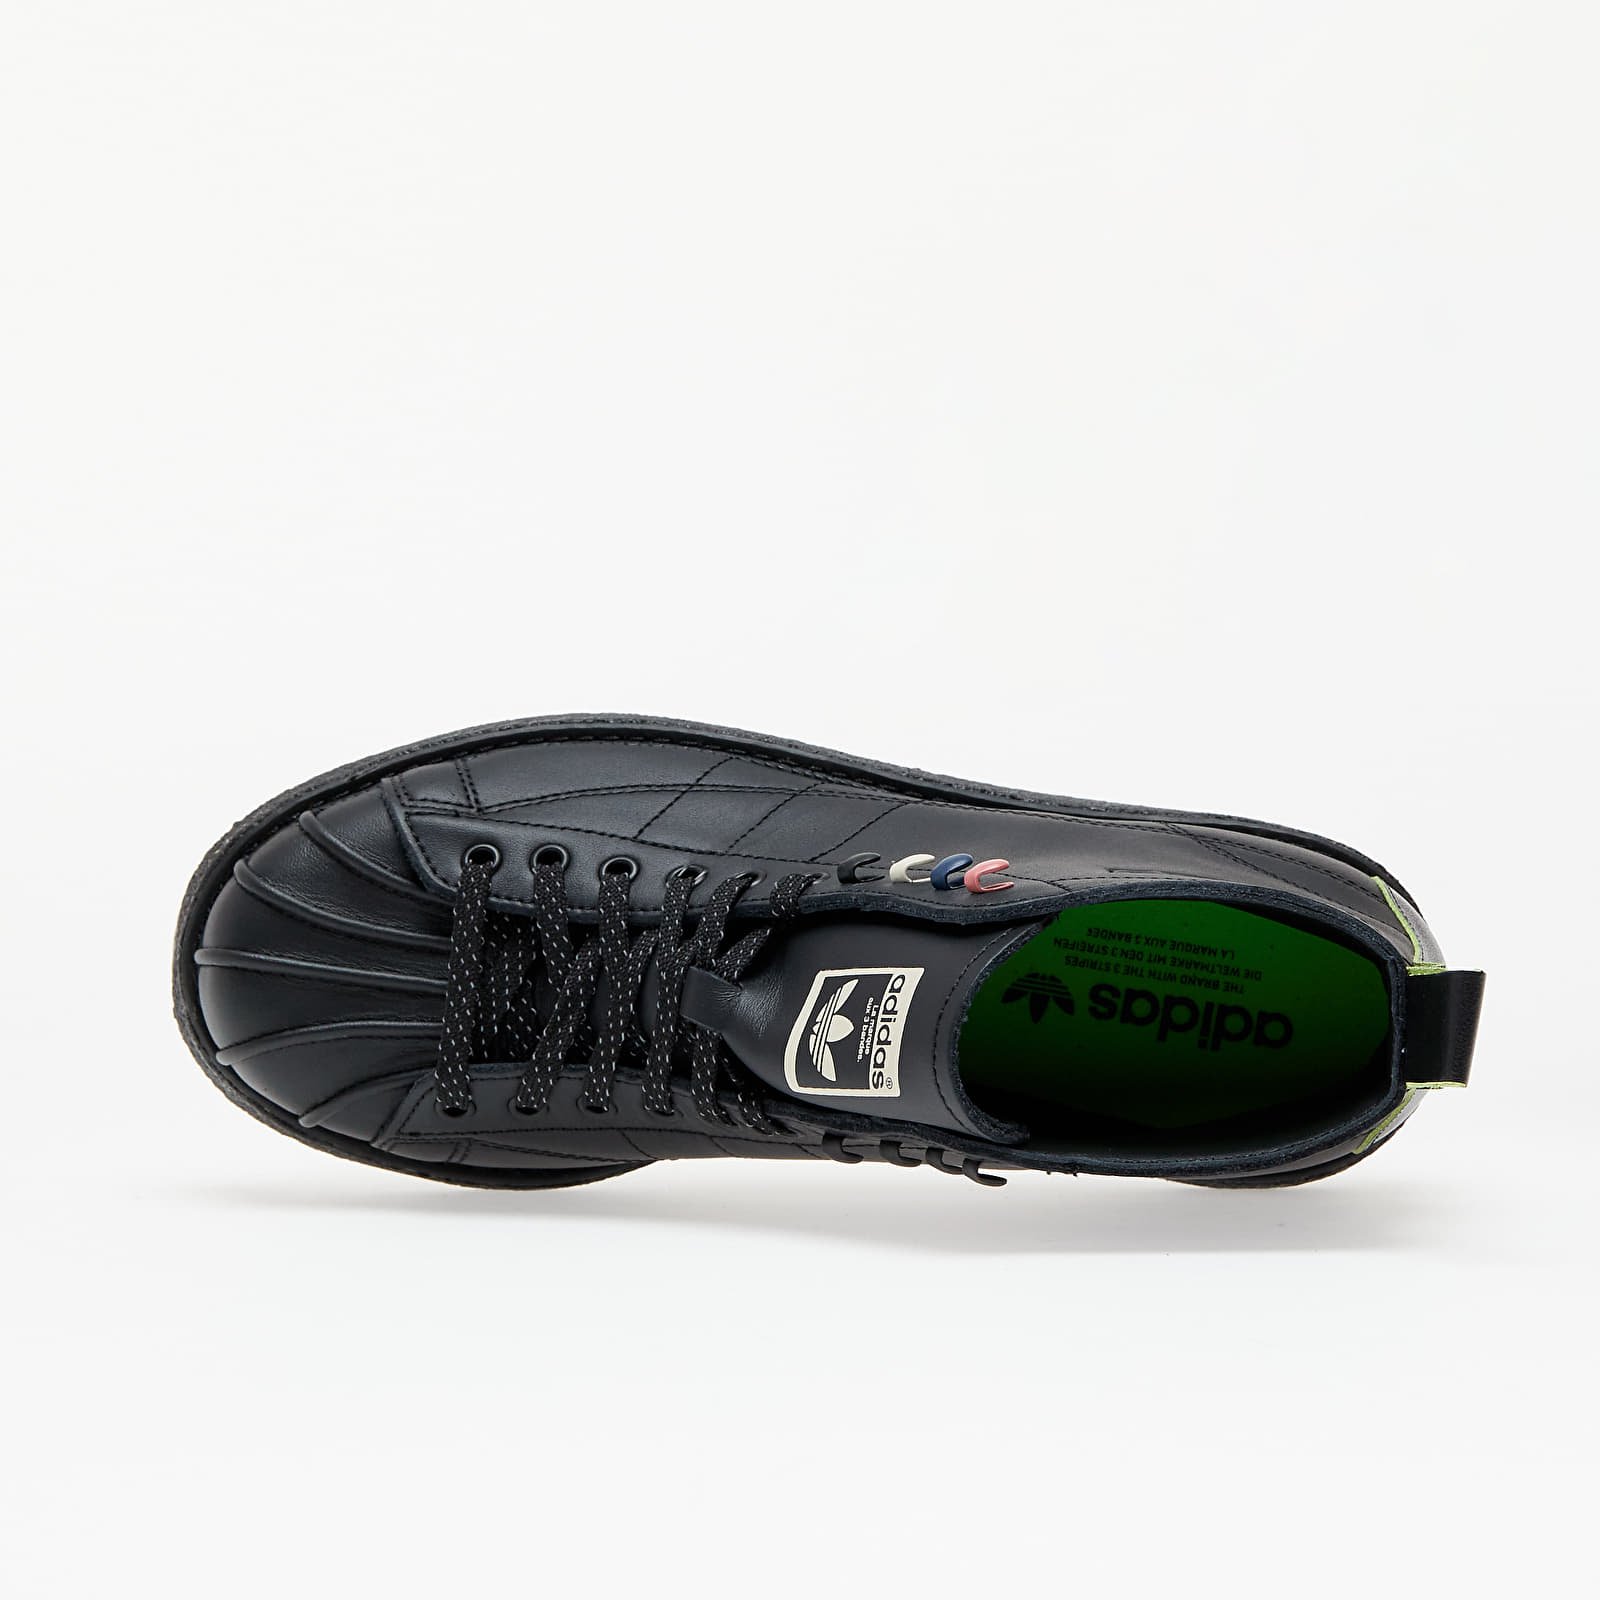 FLEXDOG Originals Boot Luxe Superstar | adidas W FY6994